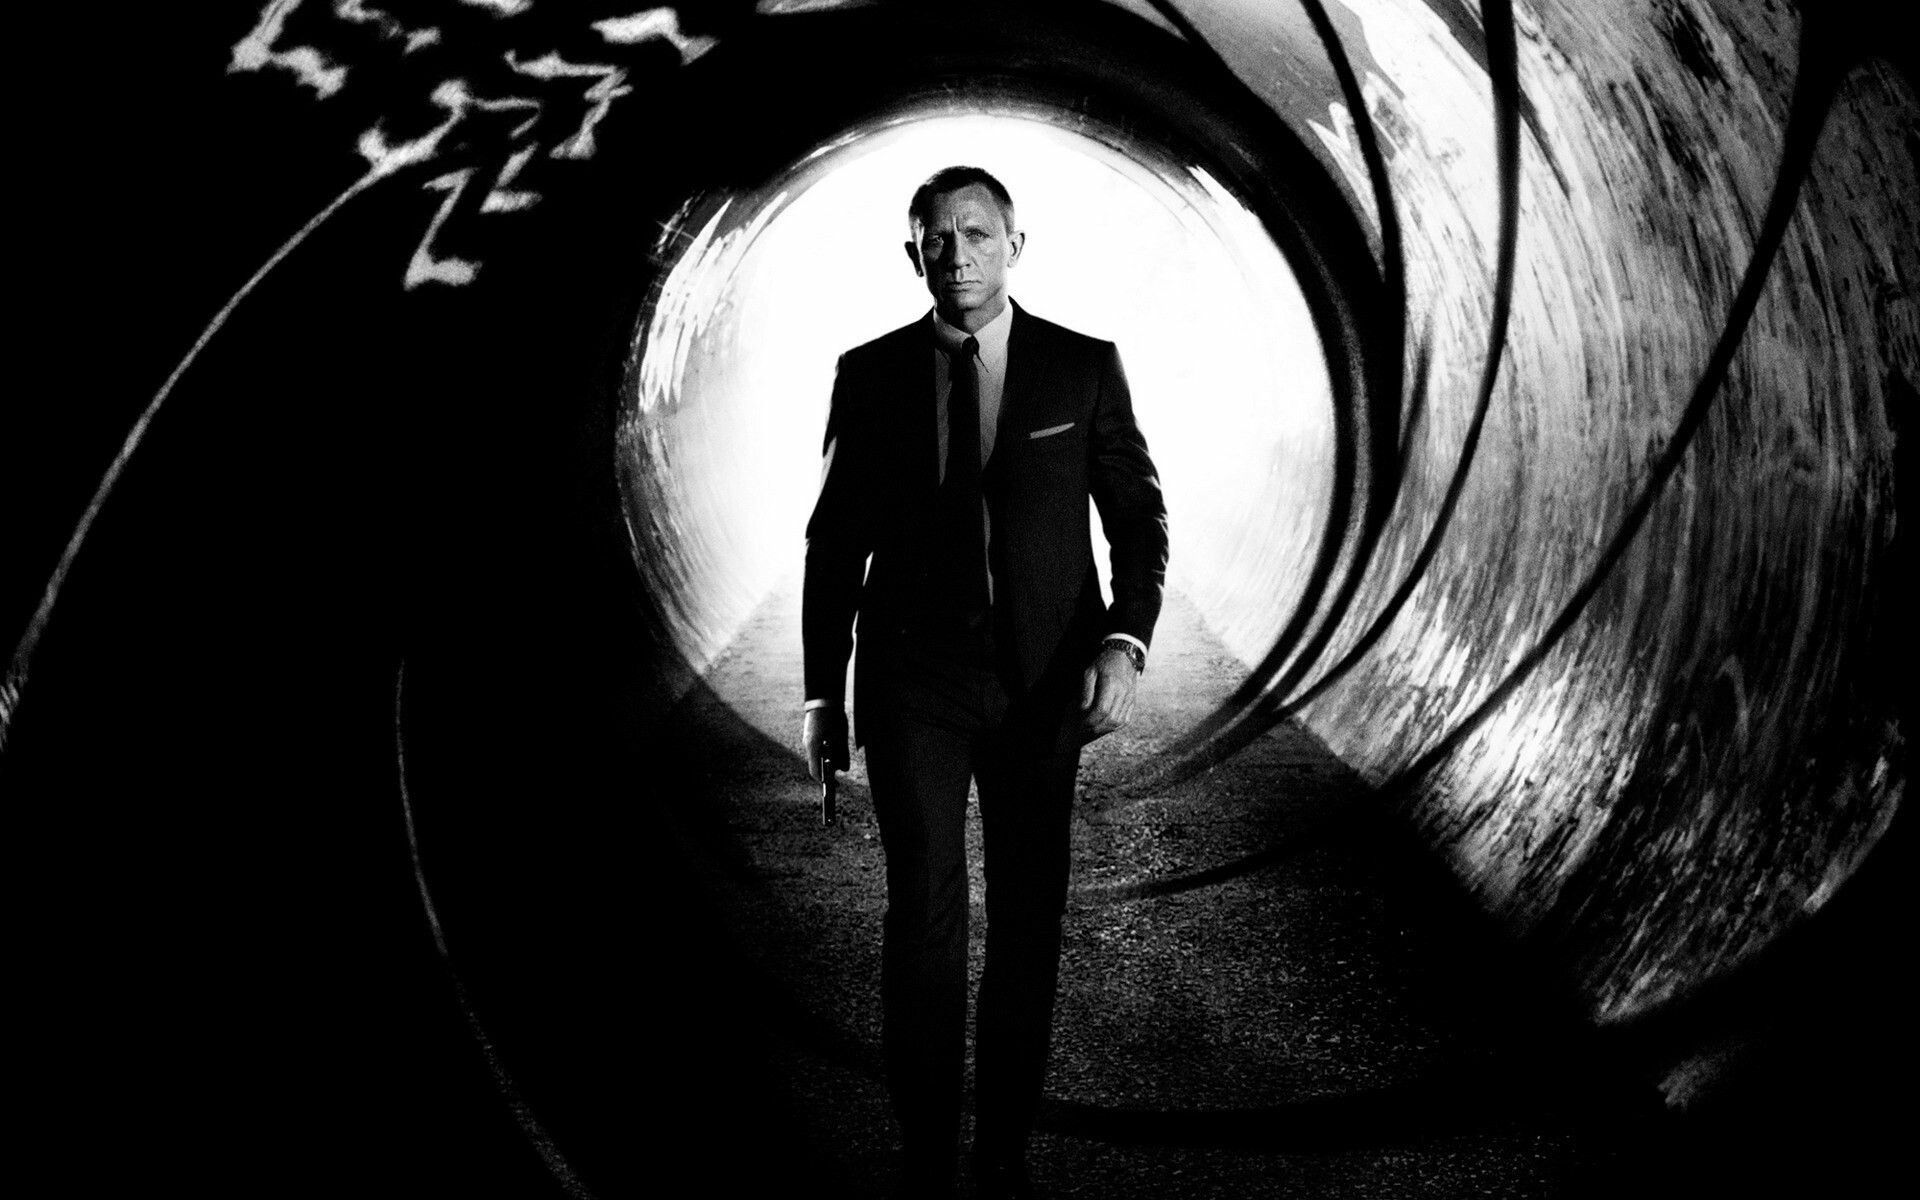 James Bond: 007 gun barrel, A Secret Service agent, code number 007. 1920x1200 HD Background.